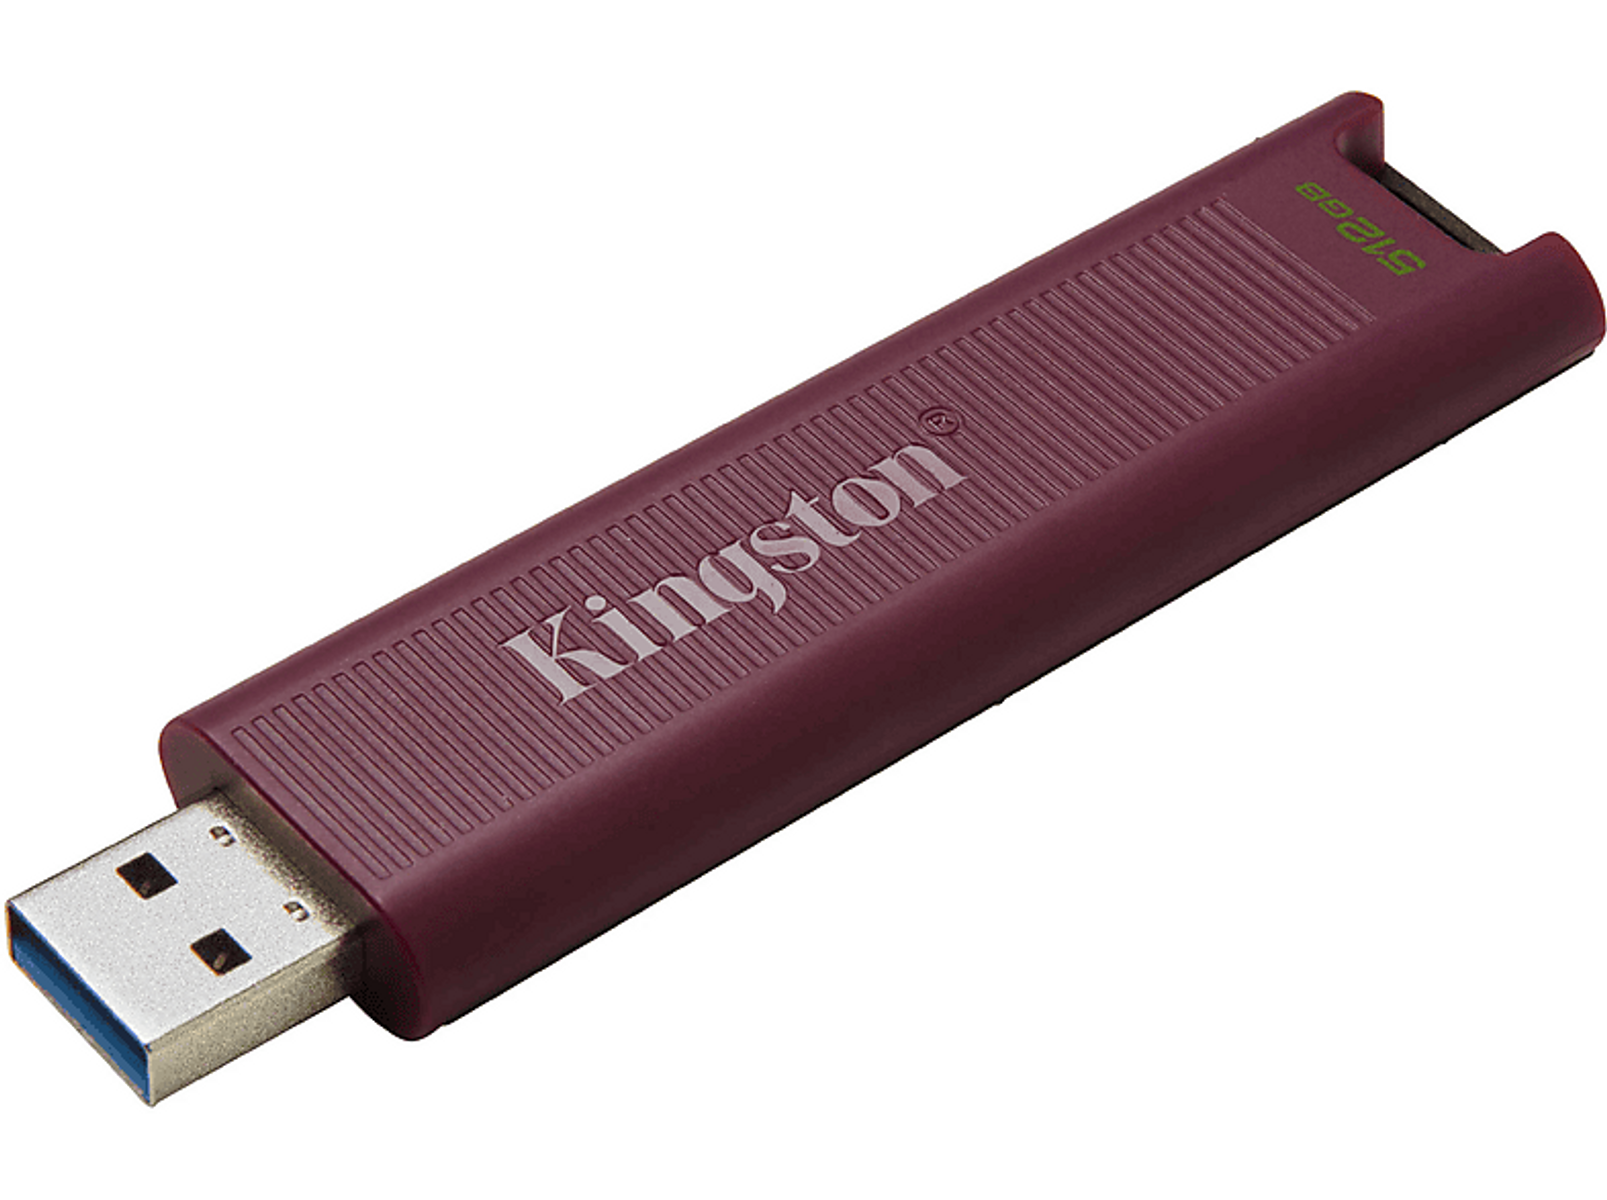 KINGSTON TECHNOLOGY DataTraveler Max USB-Flash-Laufwerk (Dunkelrosa, GB) 512